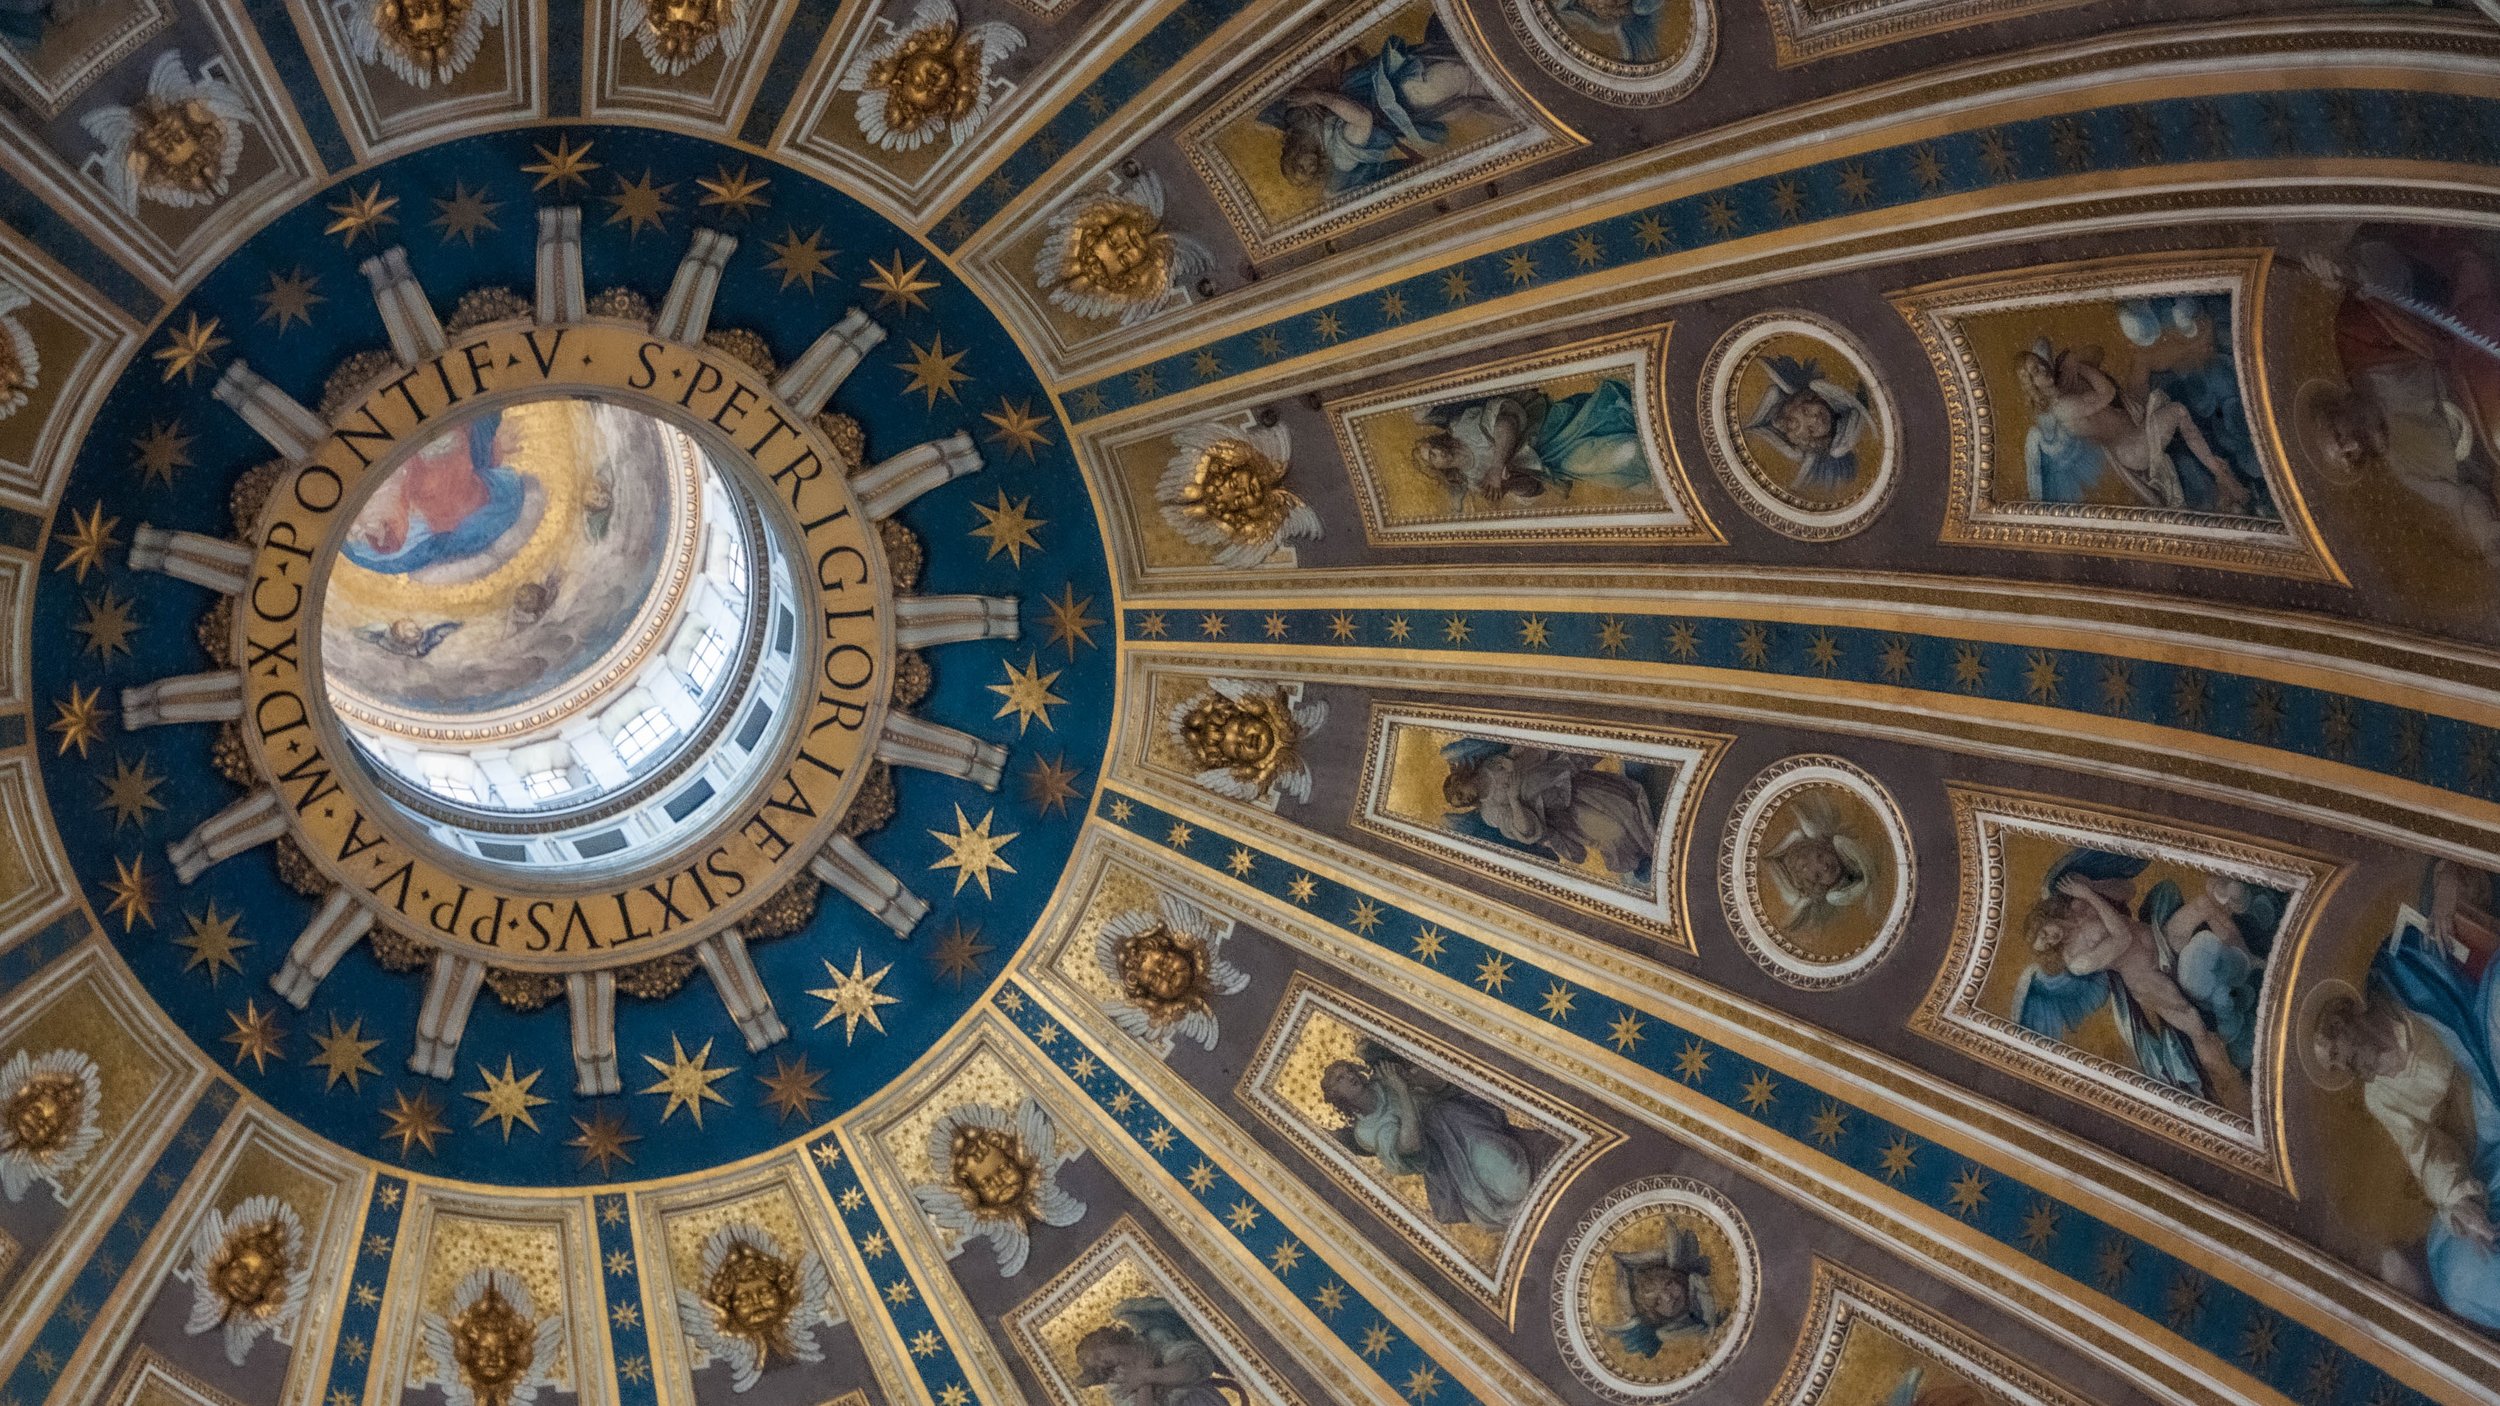 St. Peter's Basilica_fernando-mola-davis-dxN8jnL5Qr4-unsplash.jpg